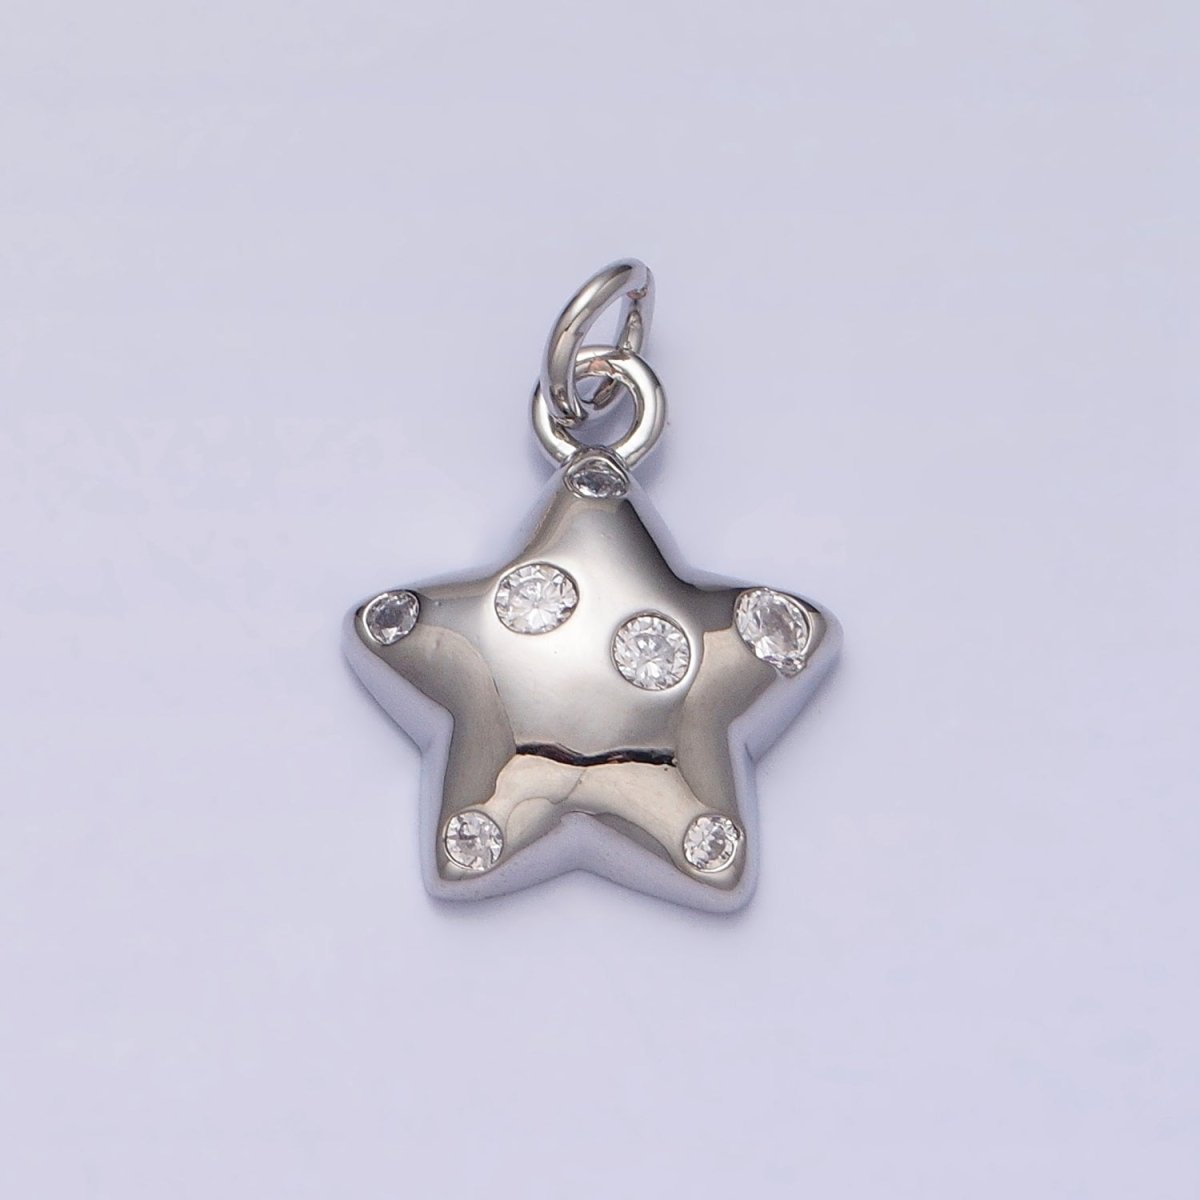 Mini Gold Star Charm with CZ Stone Dots Bubble Celestial Jewelry Pendant AC514 AC515 - DLUXCA